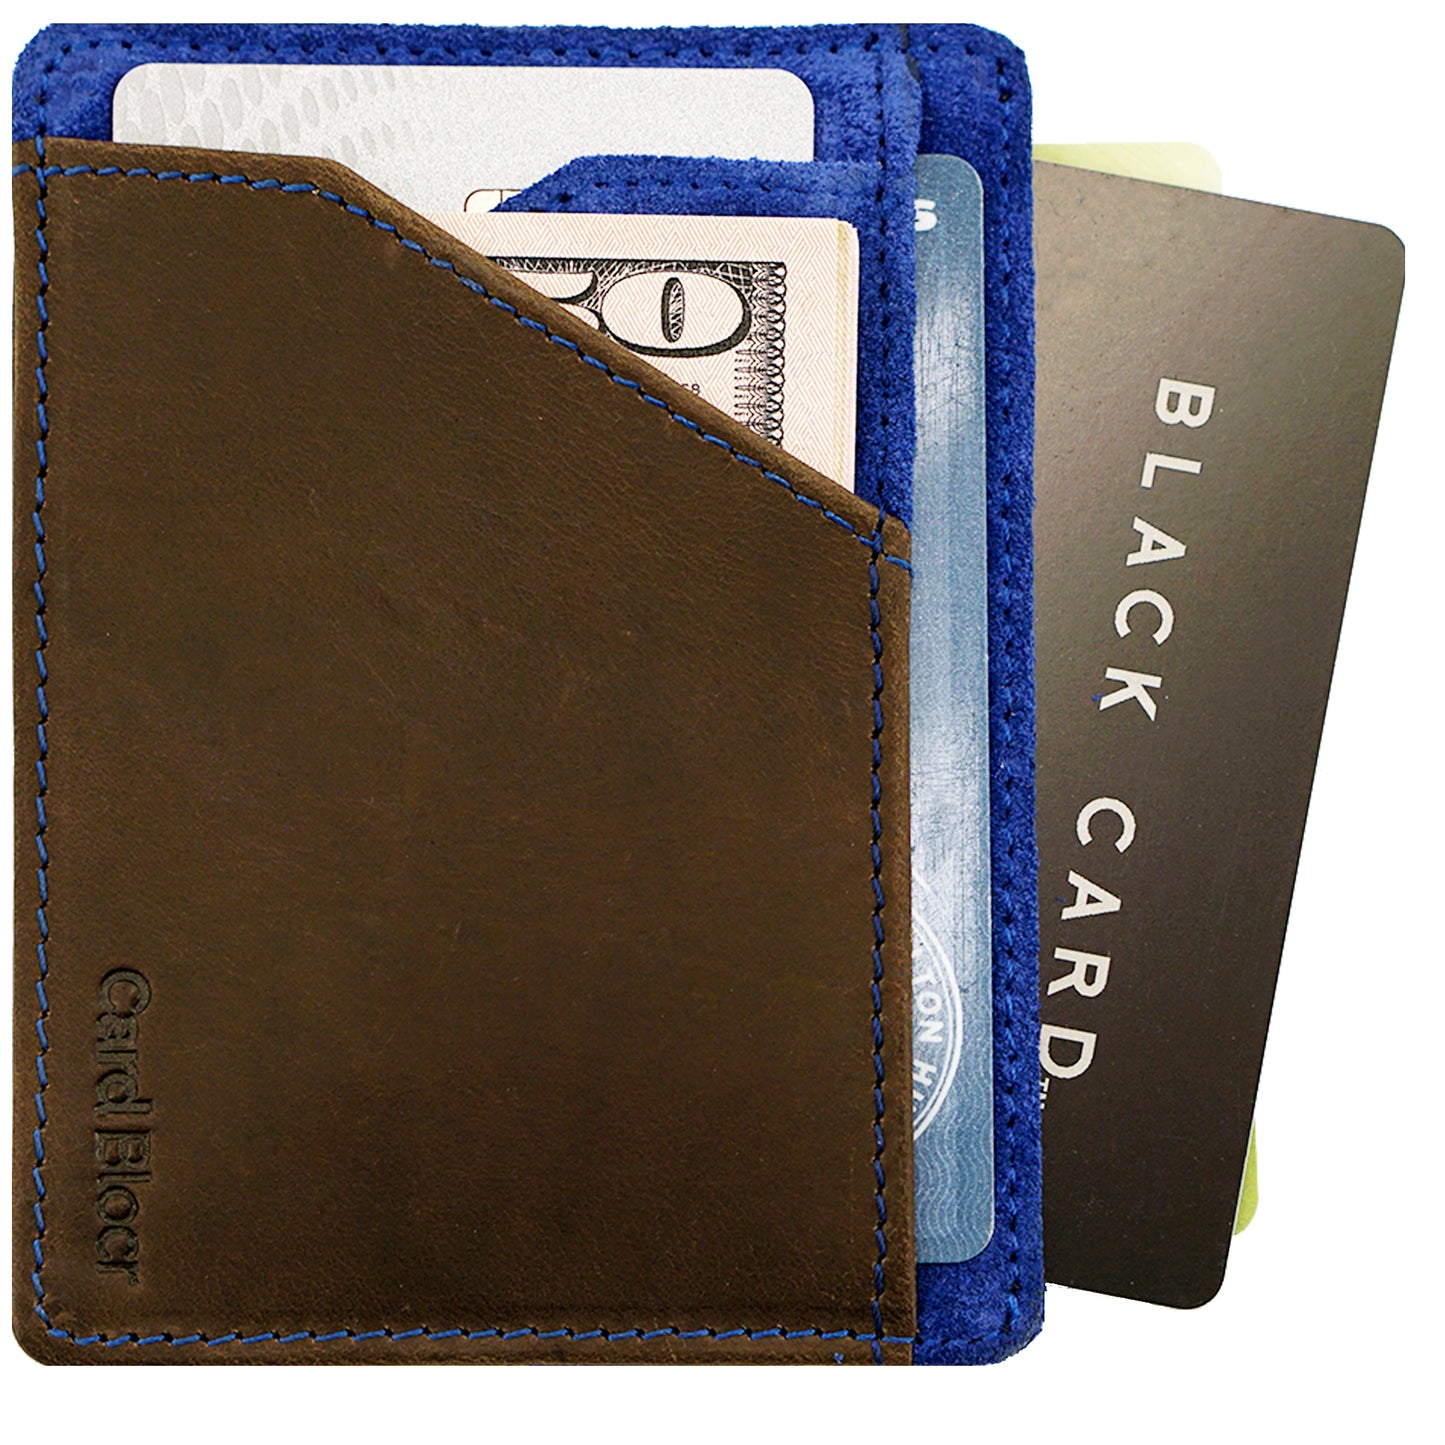 Card Blocr Minimalist Wallet in Brown Leather & Blue Suede | RFID Blocking Wallet